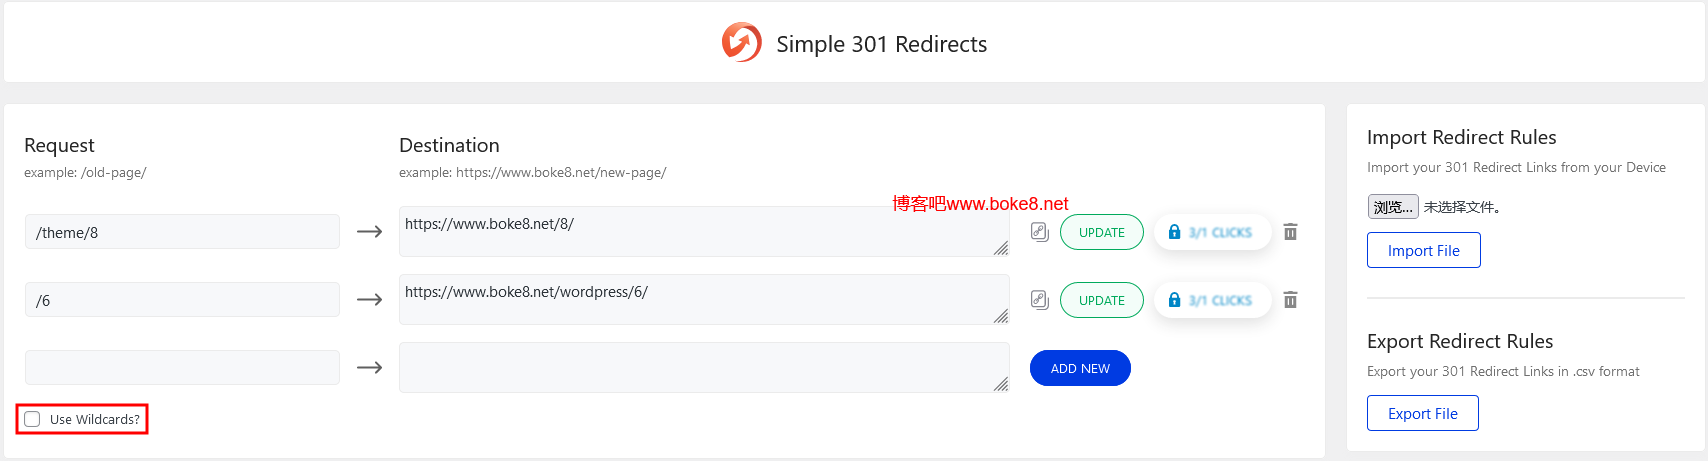 WordPress自定义指定URL 301重定向插件Simple 301 Redirects